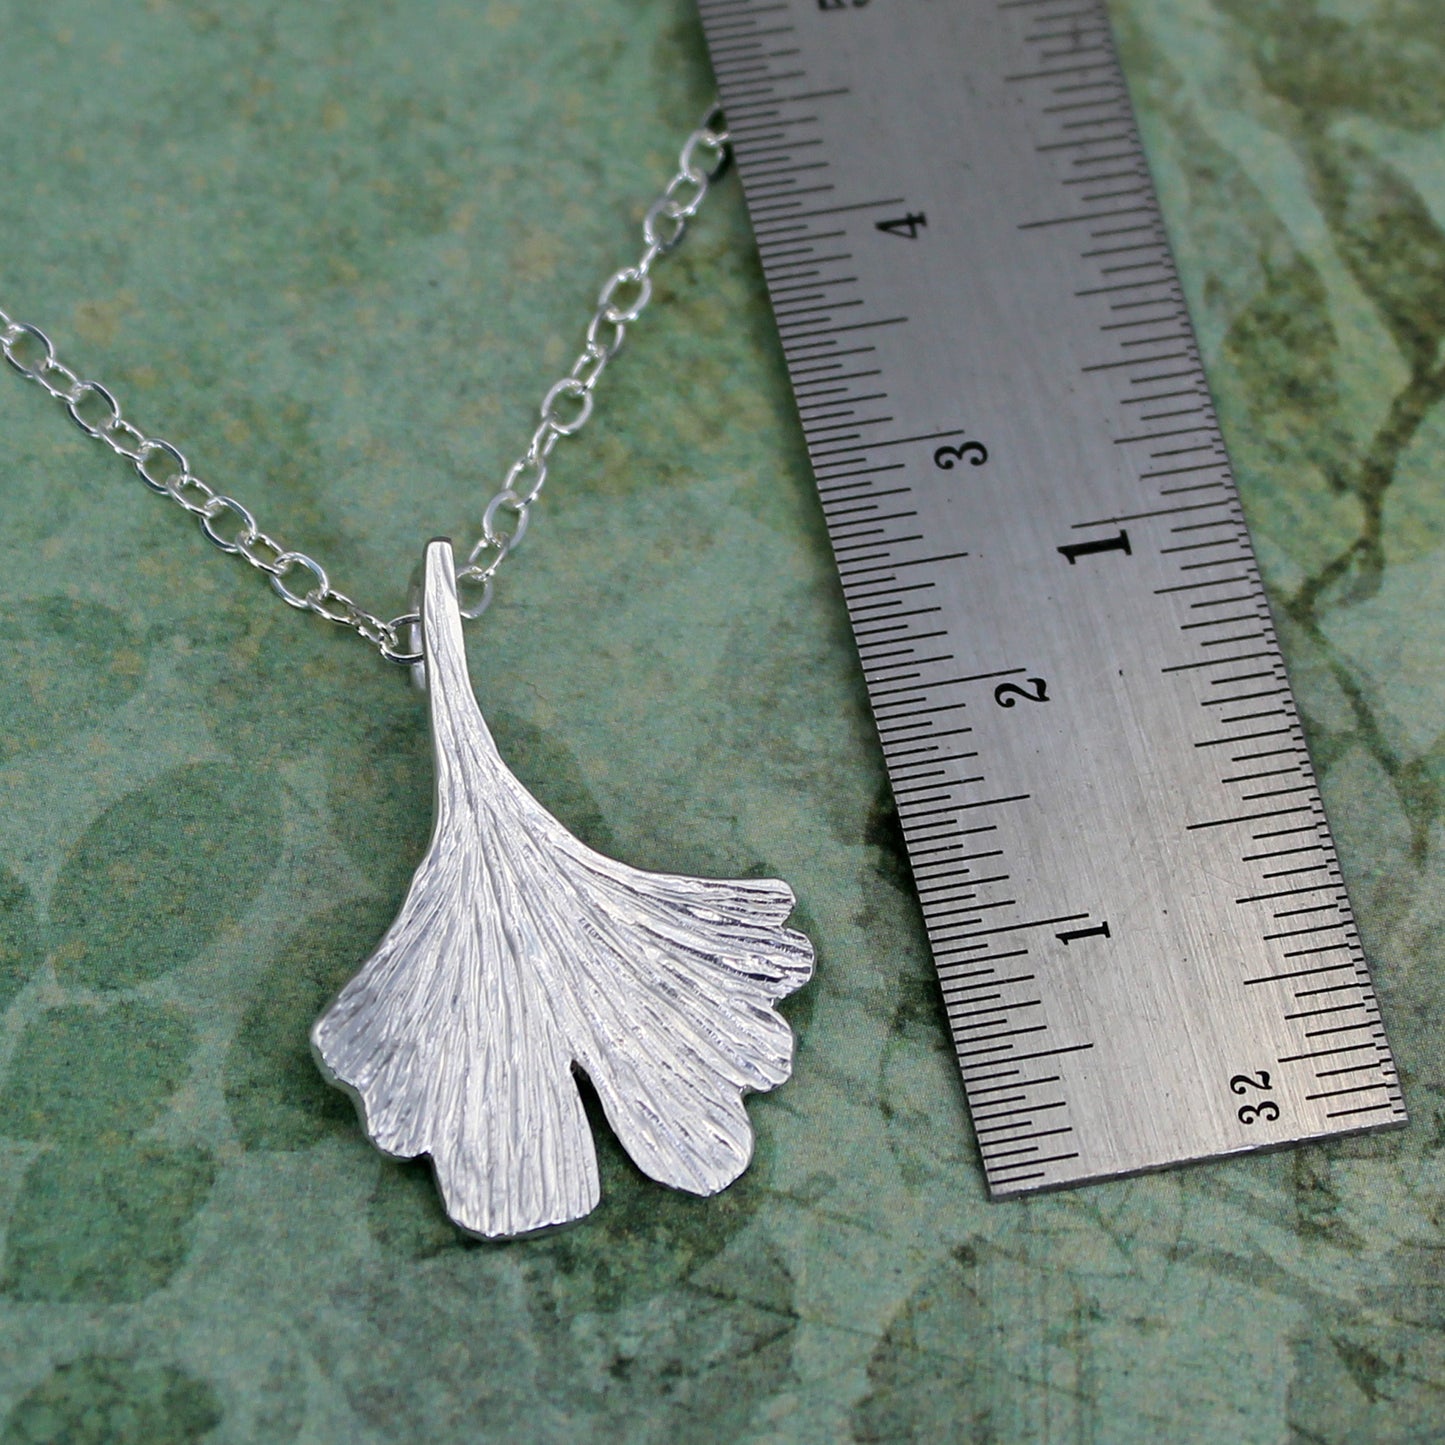 Silver ginkgo leaf with ruler